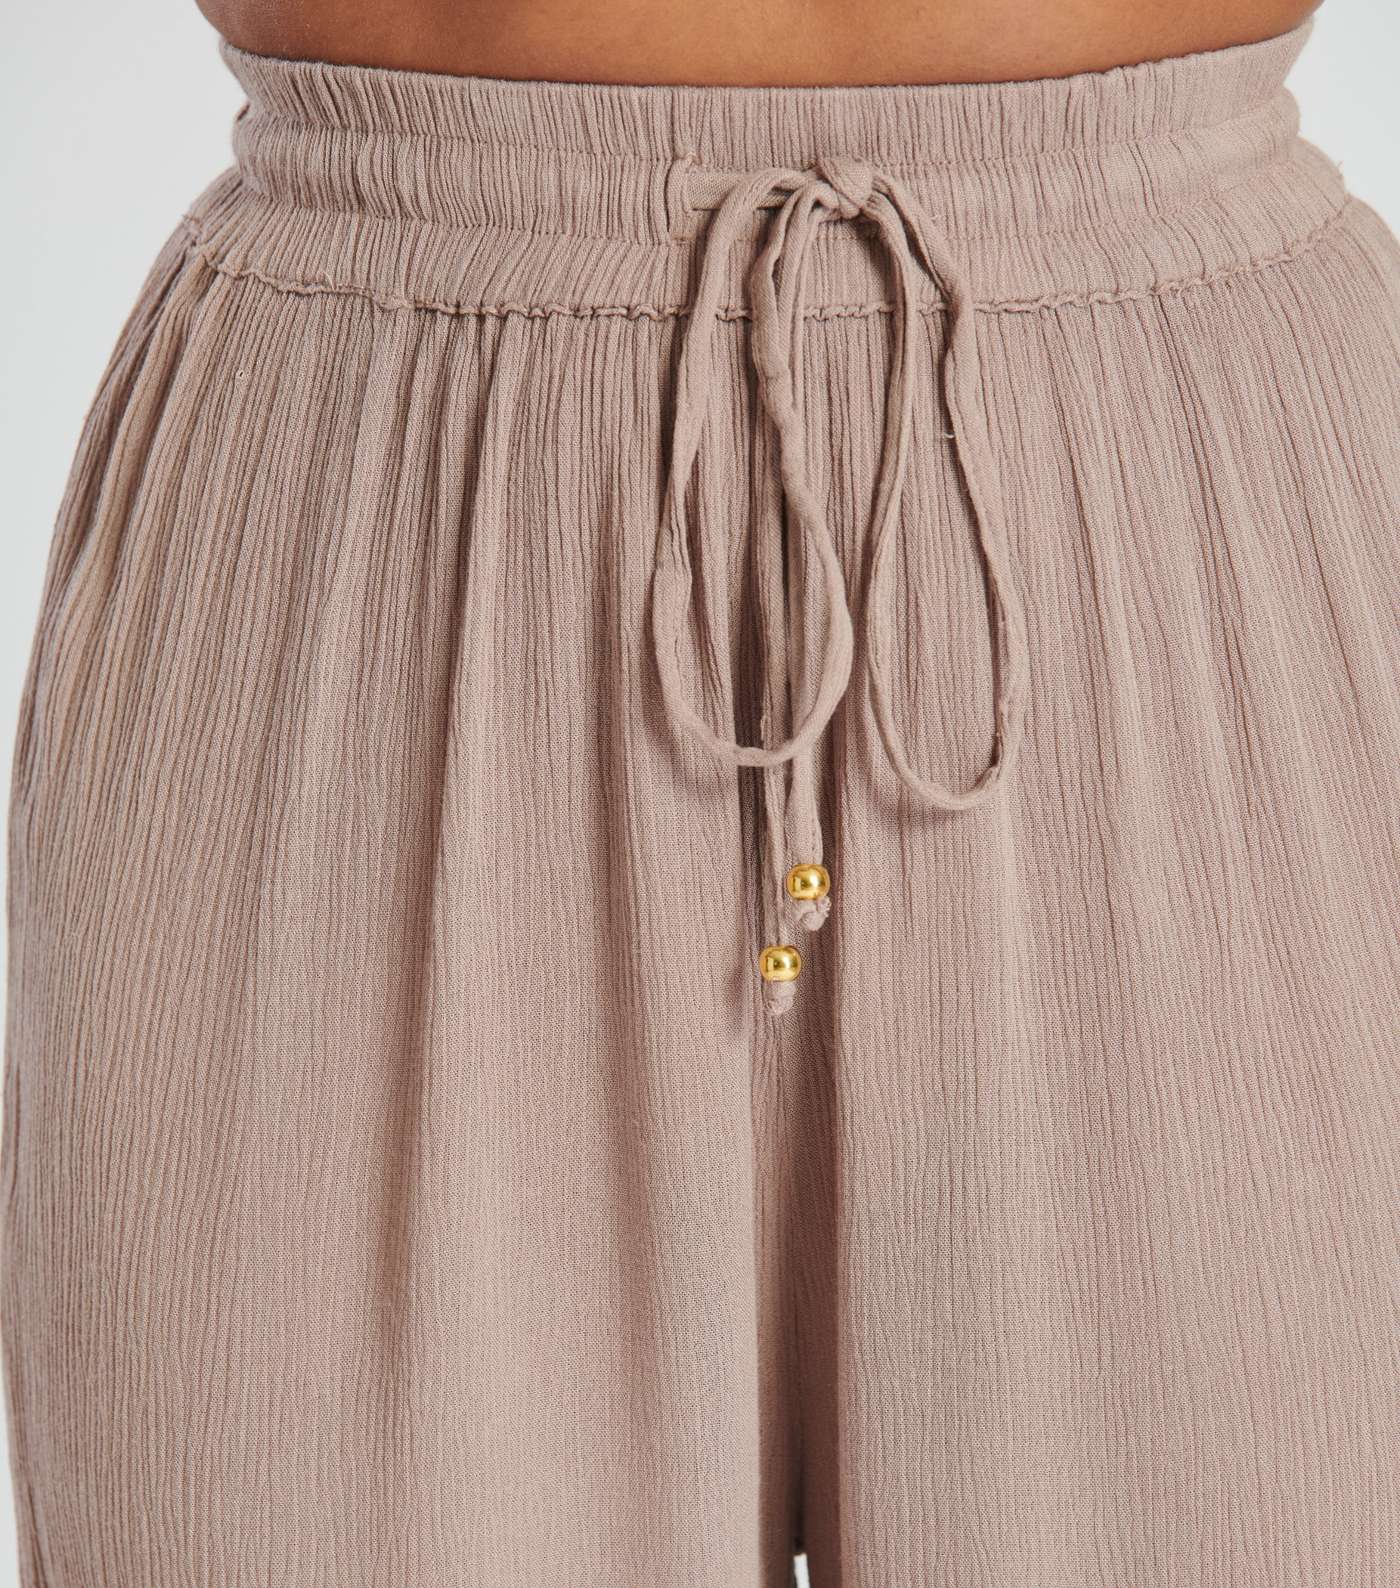 South Beach Light Brown Crinkle Tie Crop Top and Split Trouser Set Image 4